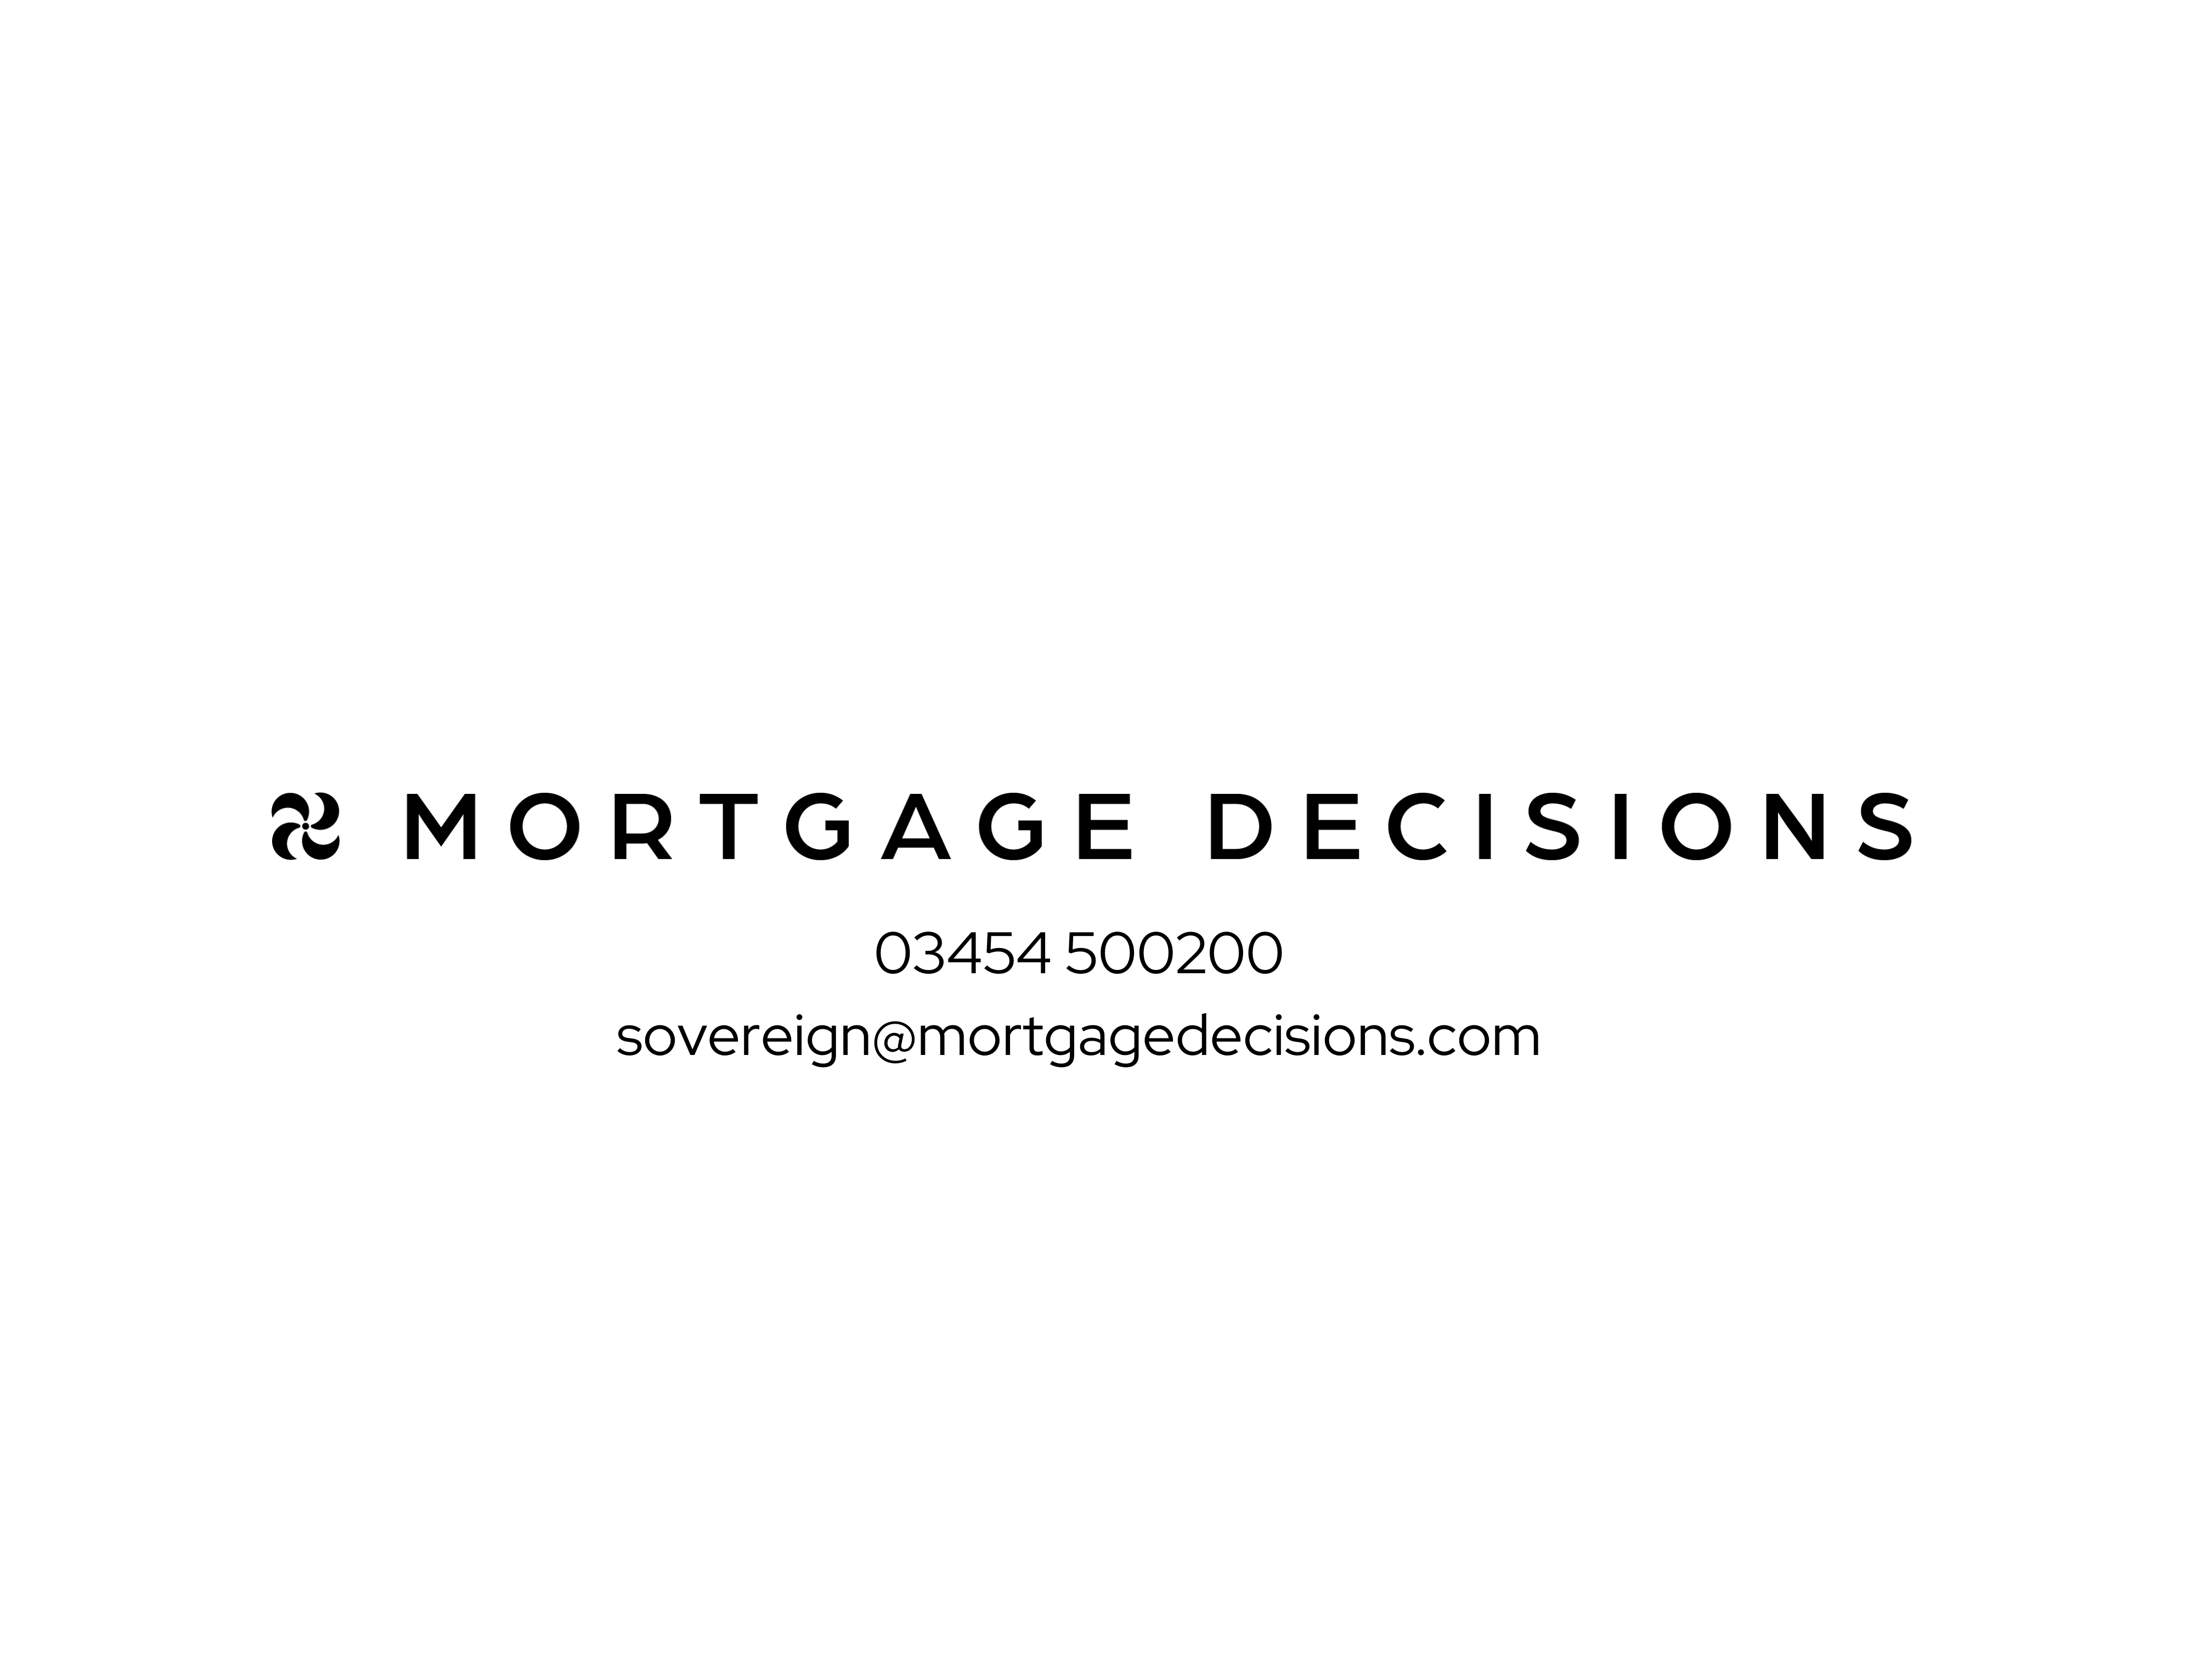 Mortgage Decisions logo 